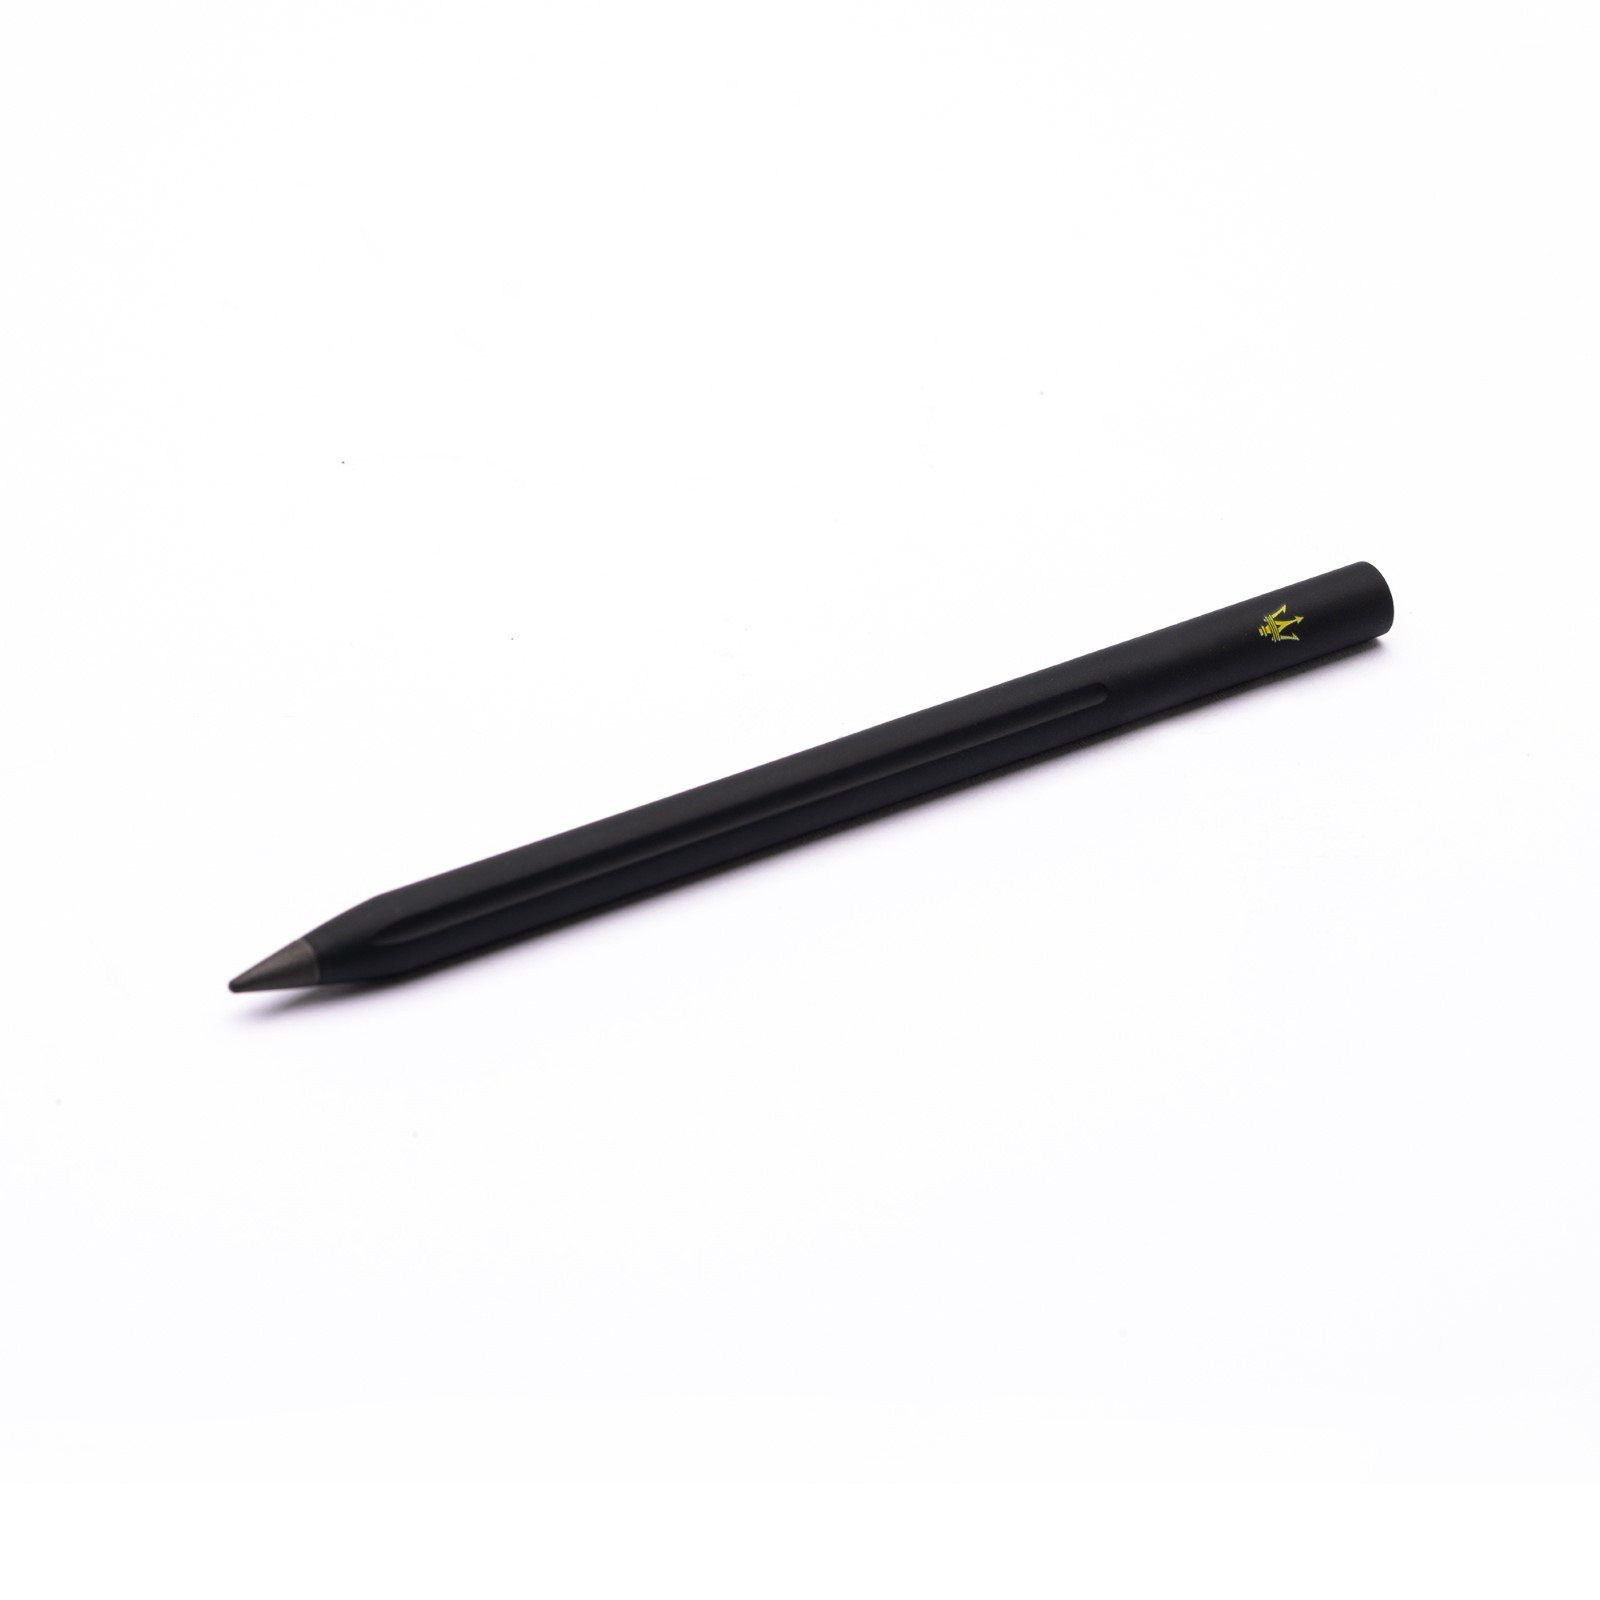 Pininfarina Bleistift Maserati Bleistift Grafeex Pininfarina Smart Pencil Bleier Schreibgerä, (kein Set) Schwarz